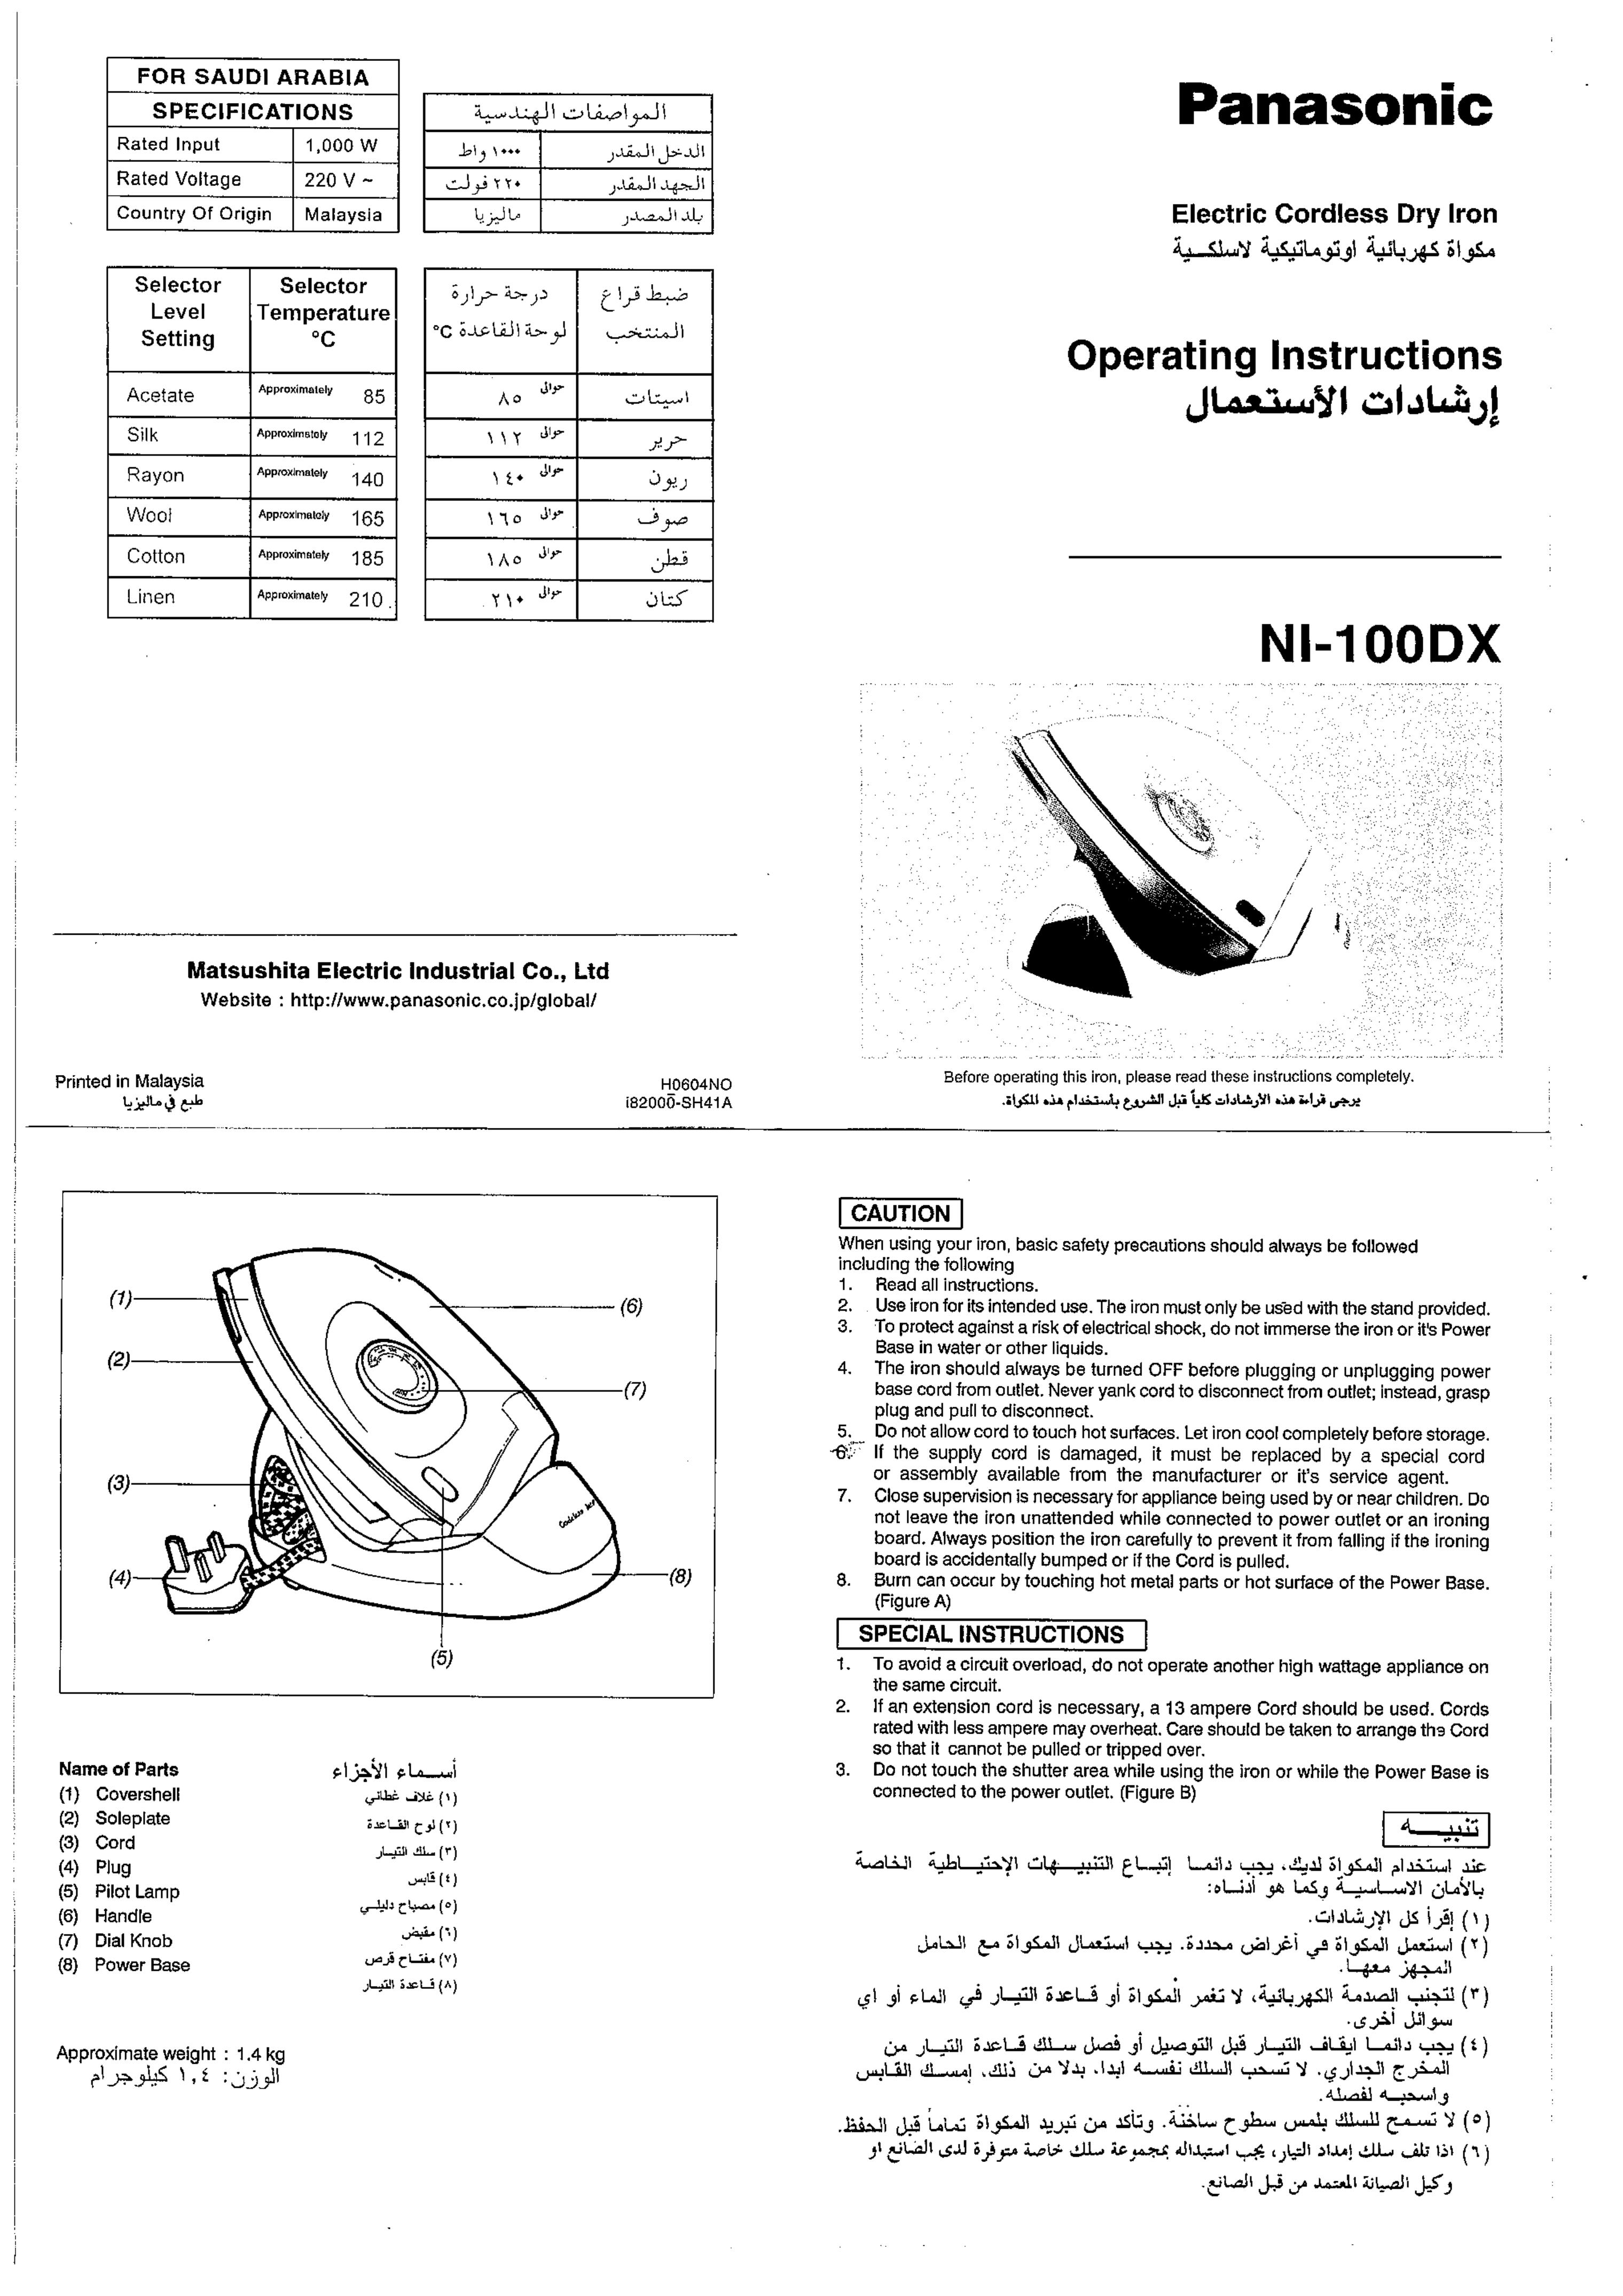 Panasonic NI-100DX Iron User Manual